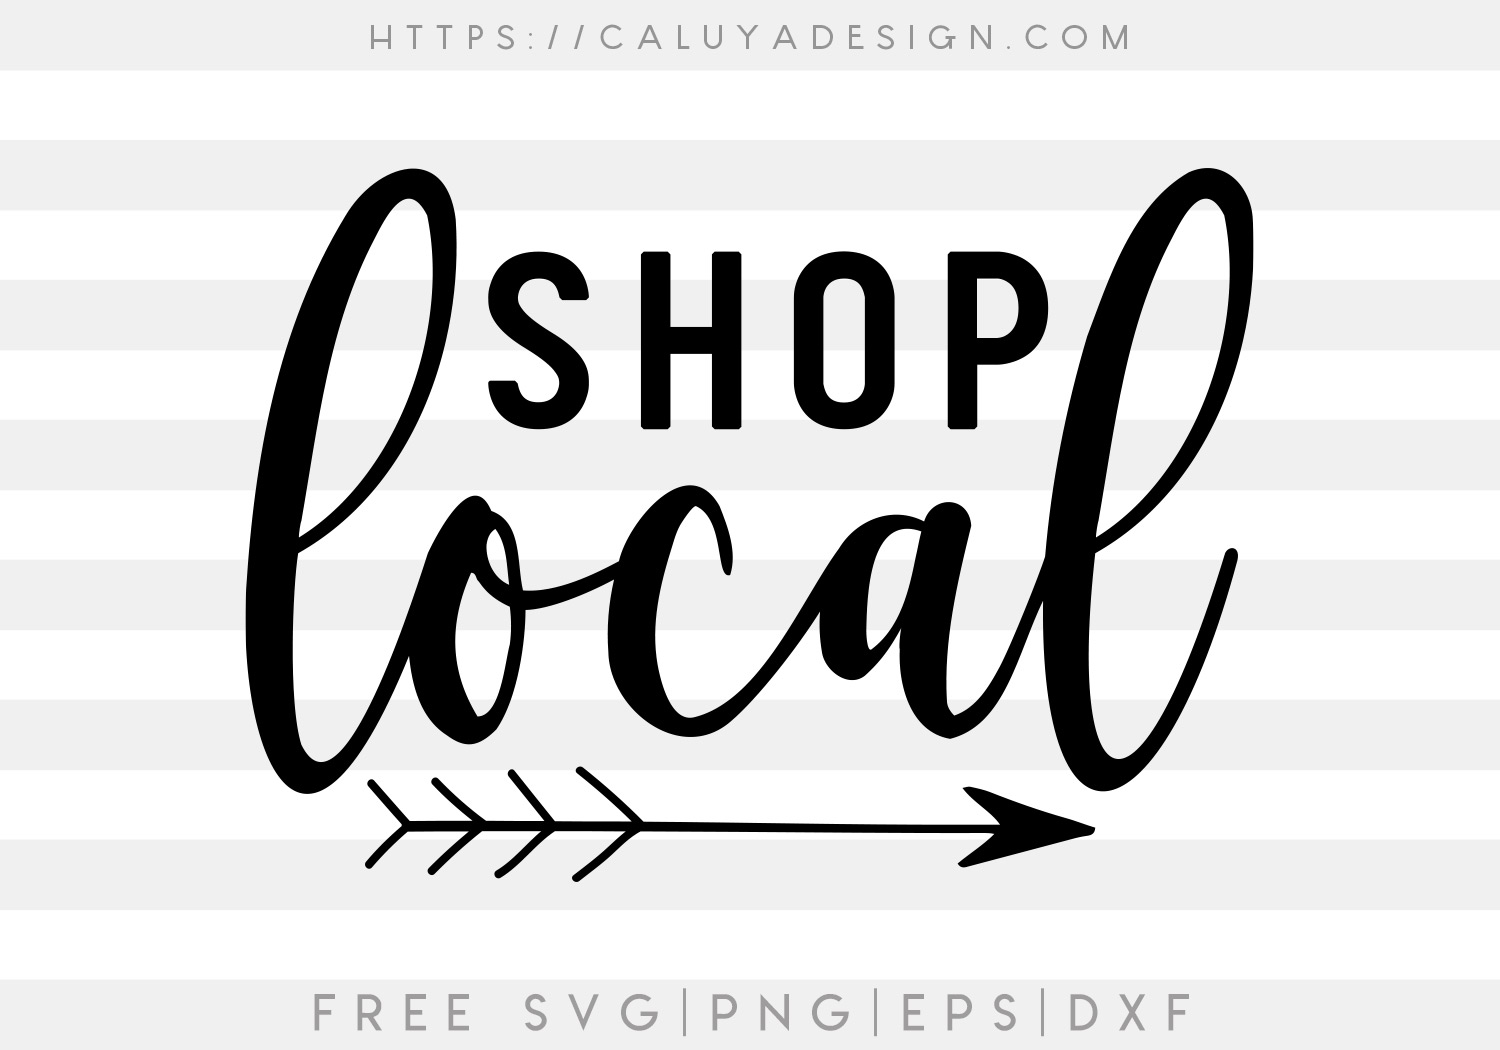 Free Shop Local SVG Cut File